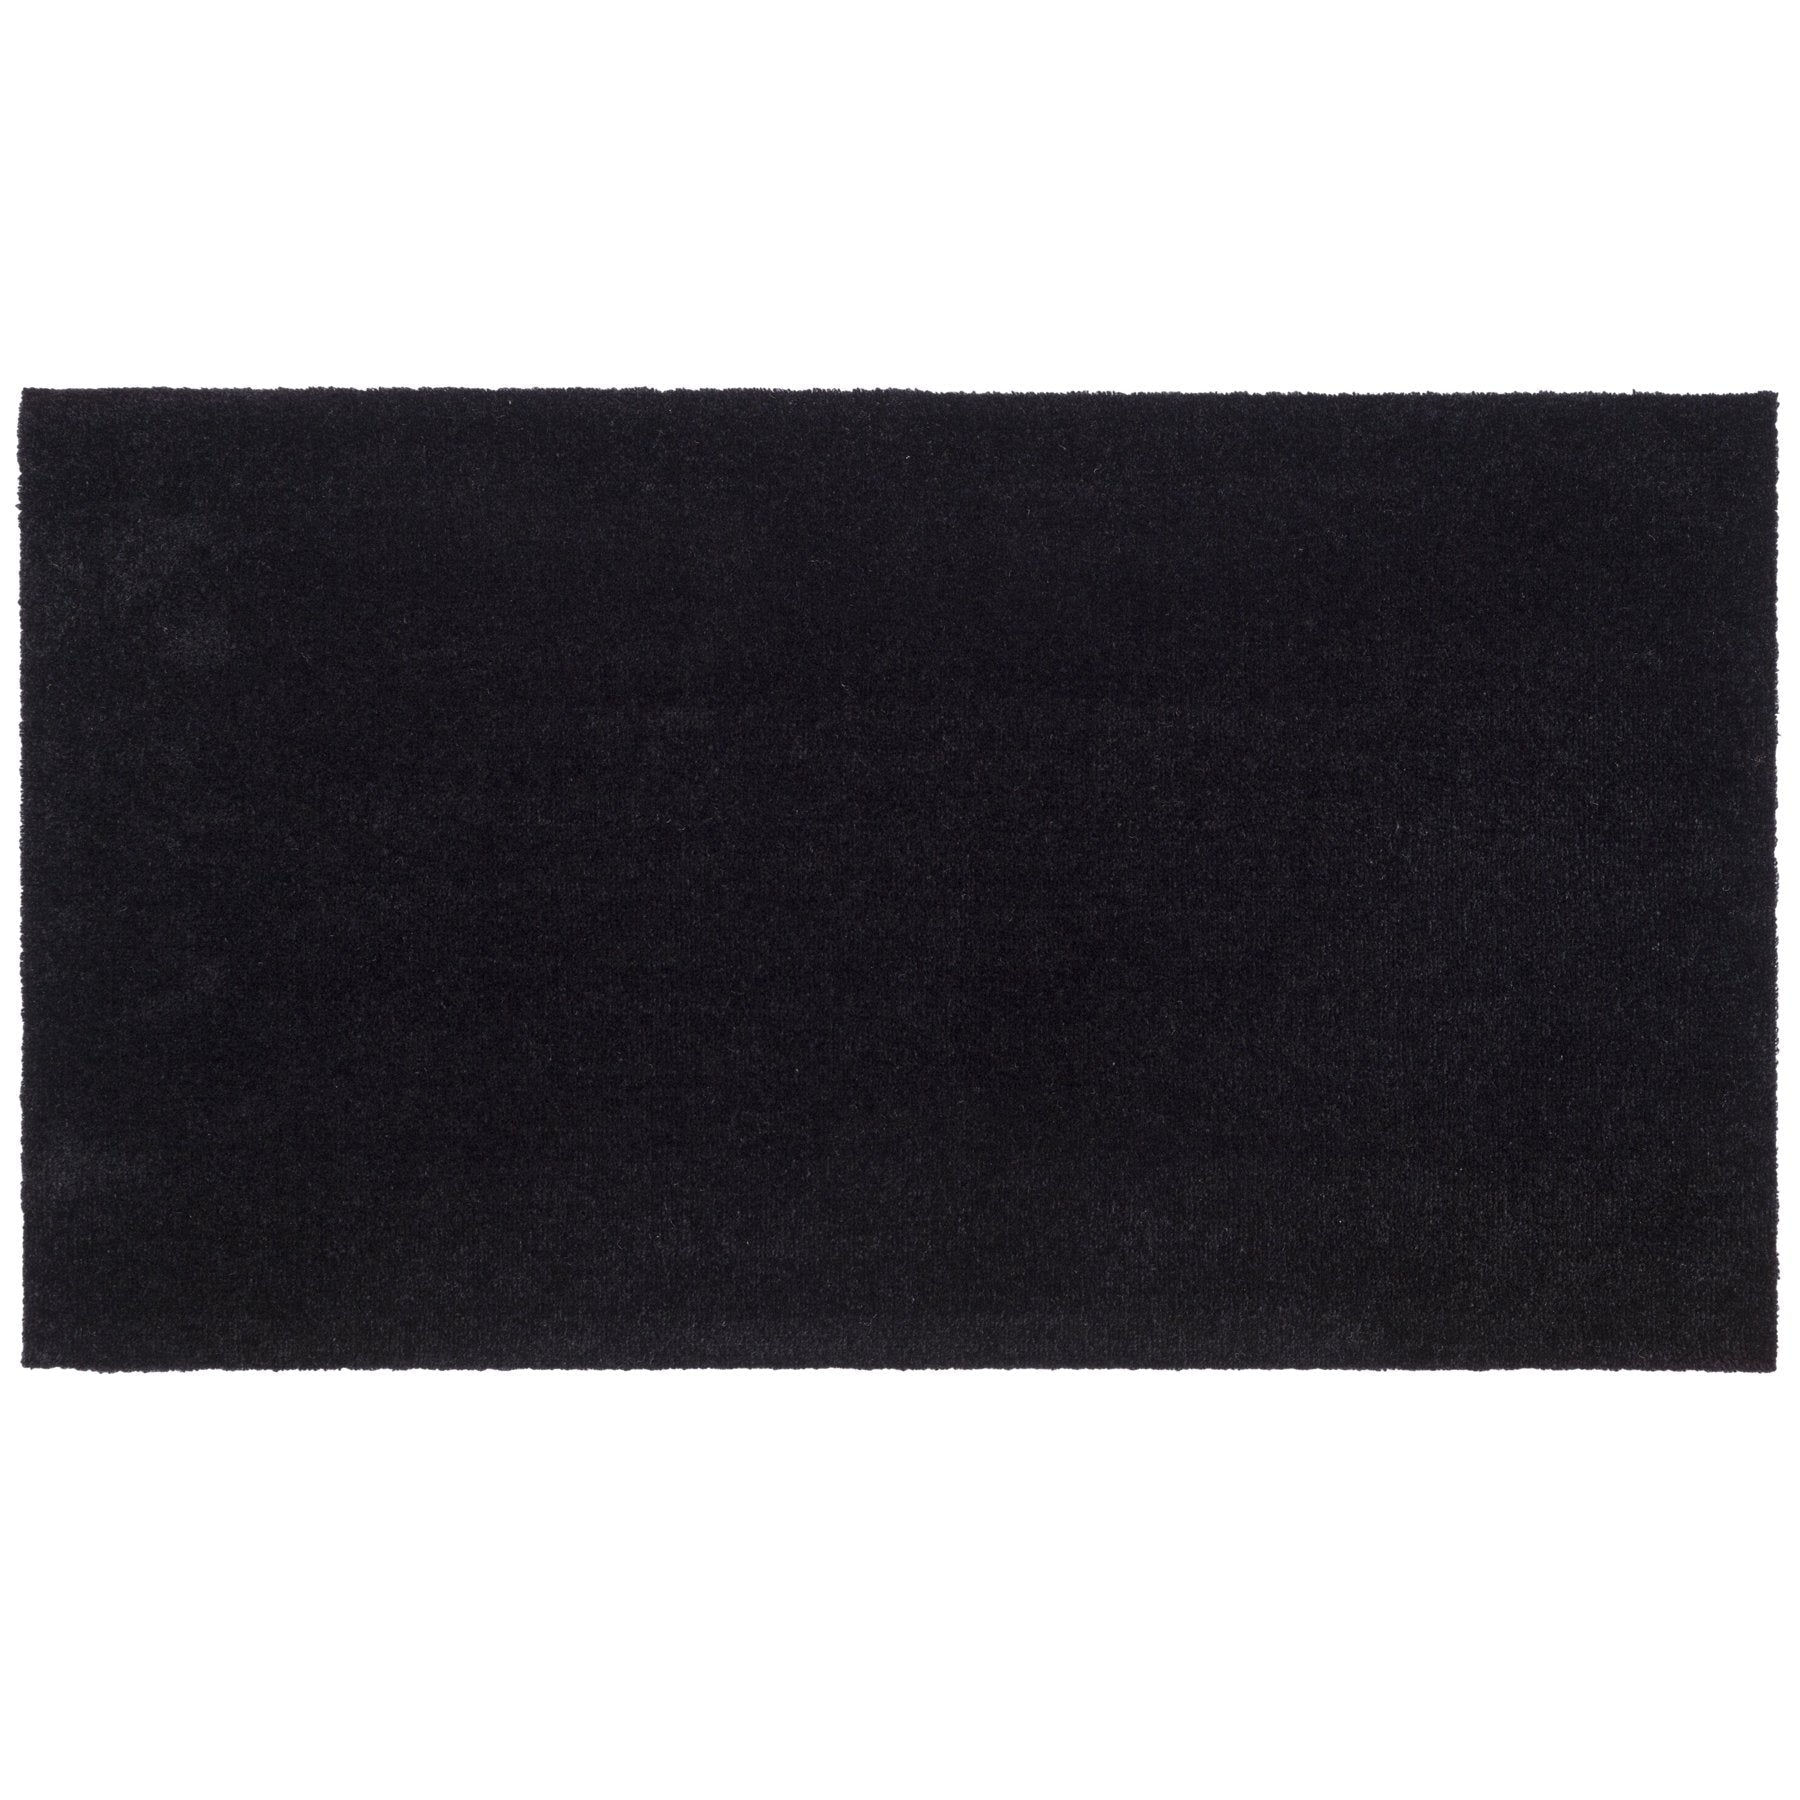 MEDIDA DE GULF 90 x 130 cm - UNI COLOUR/BLACK